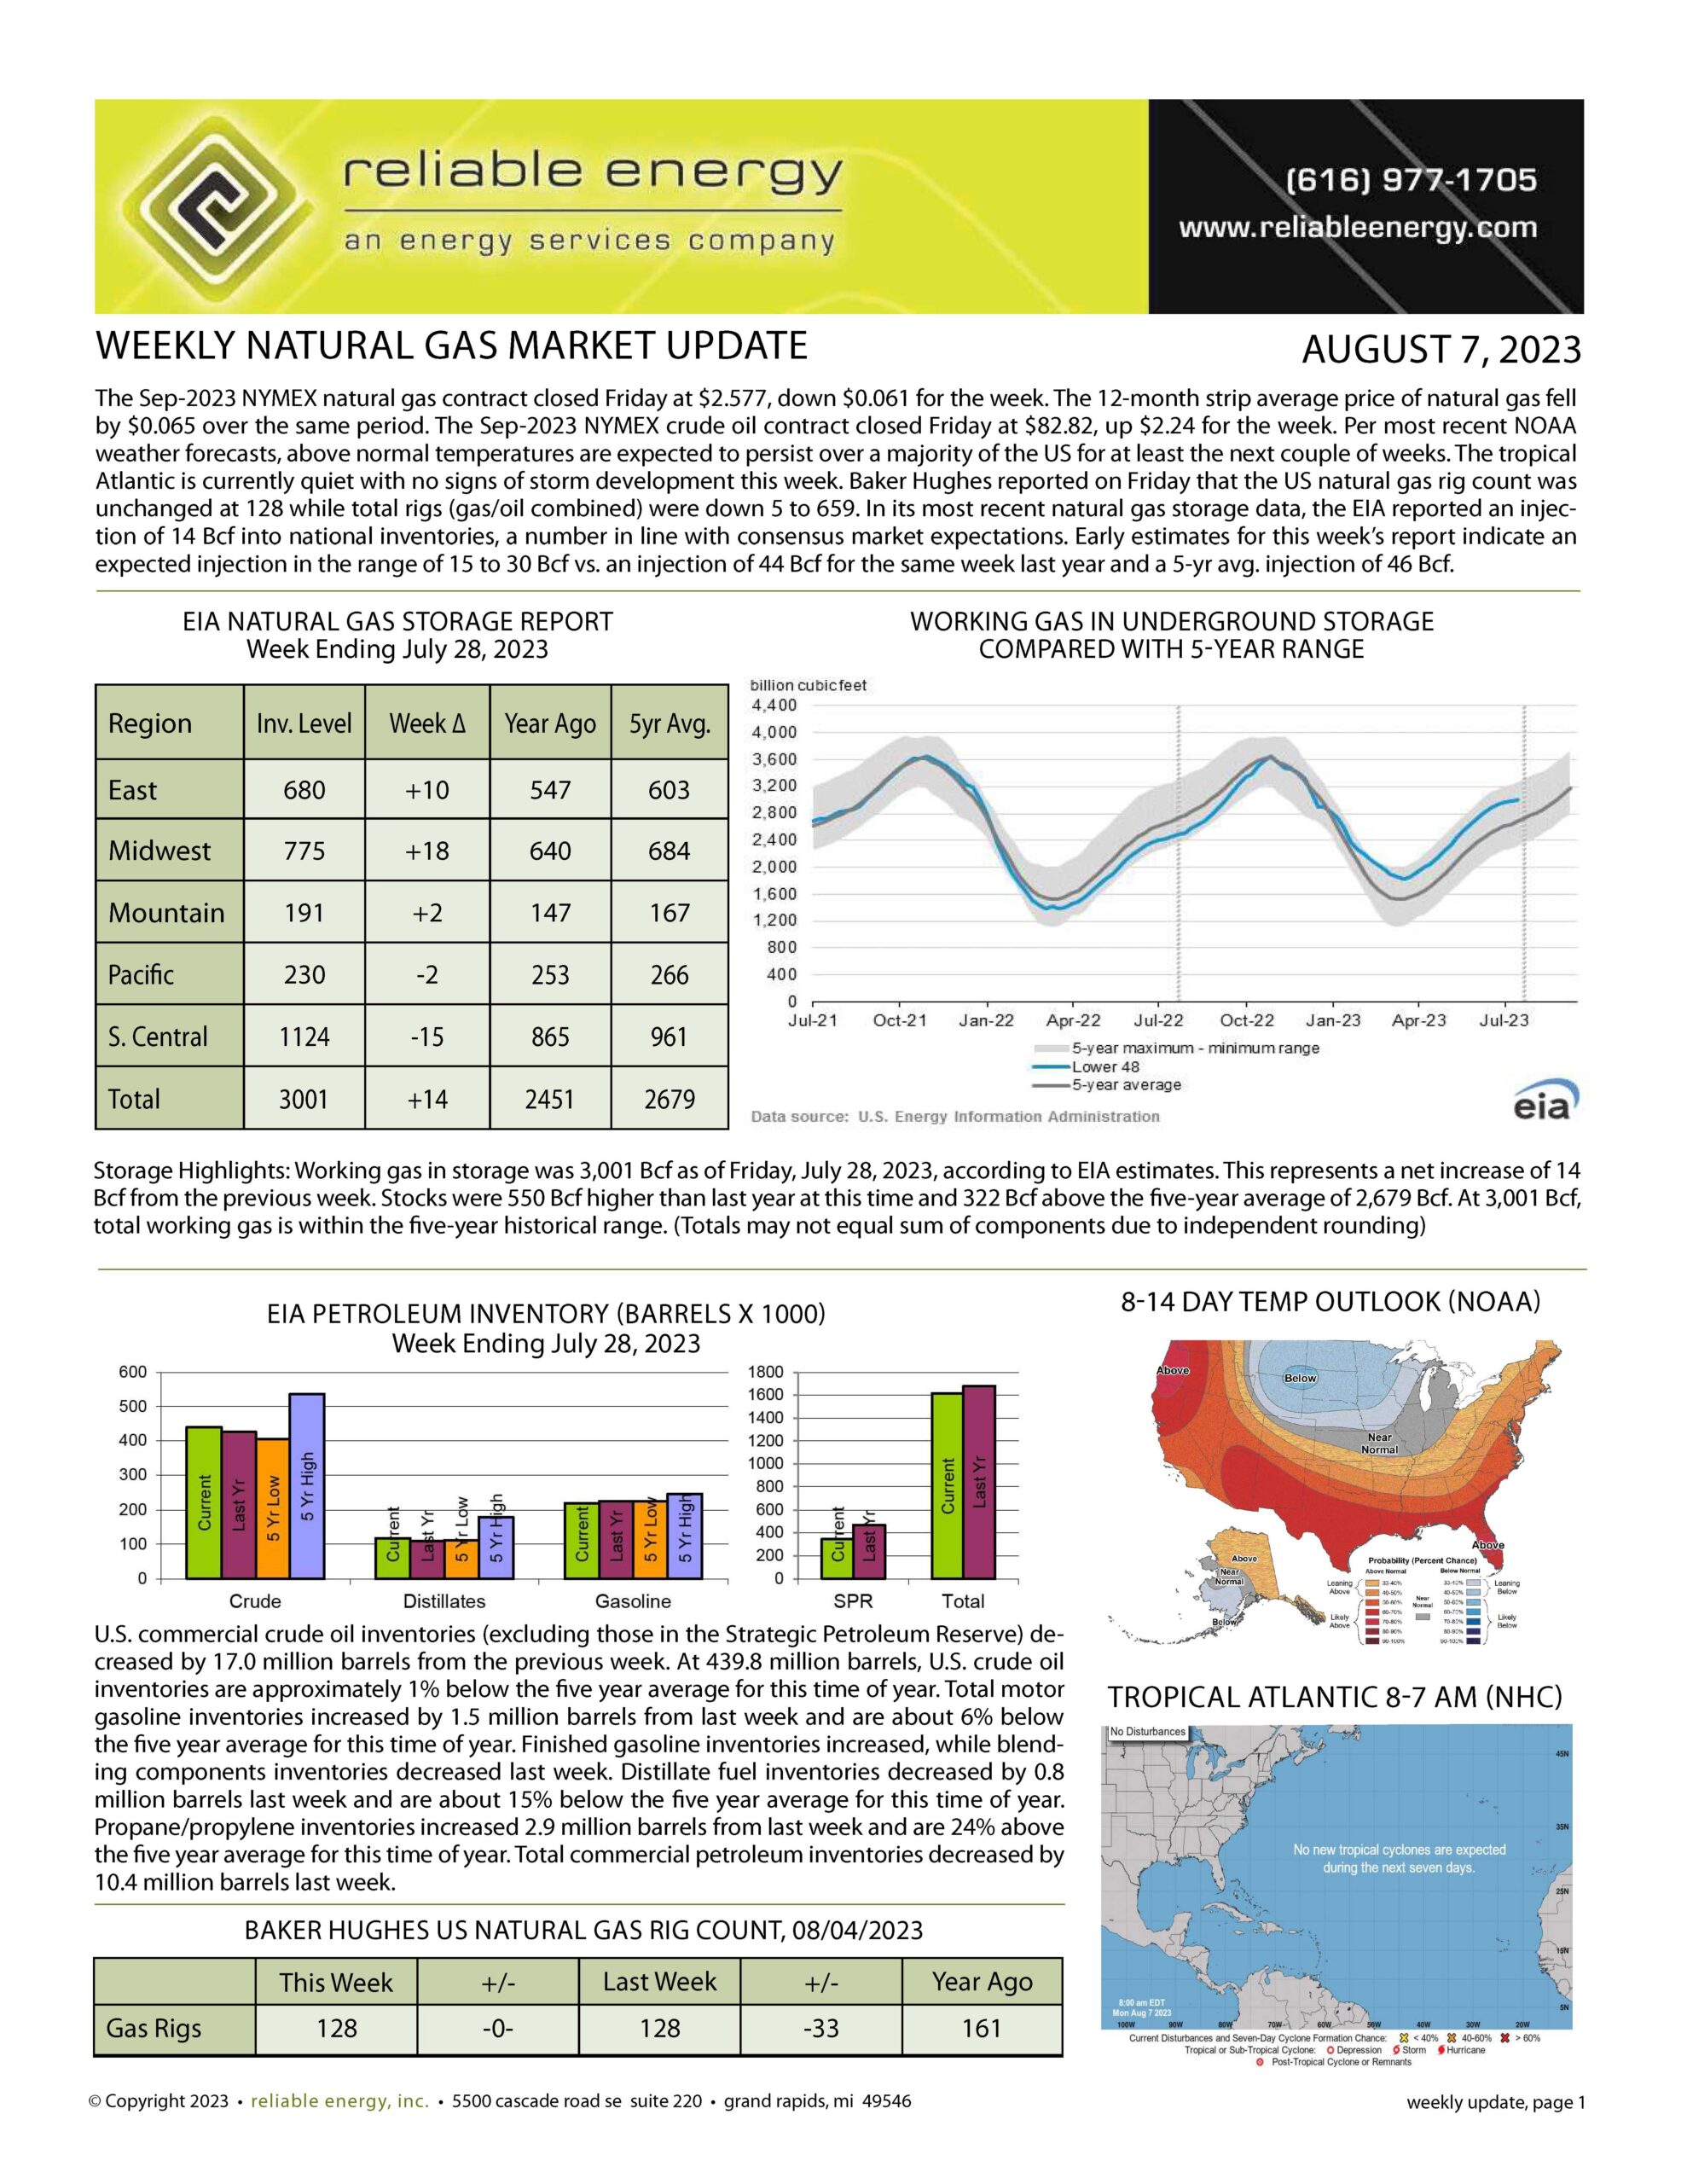 Natural Gas Market Update – August 7, 2023